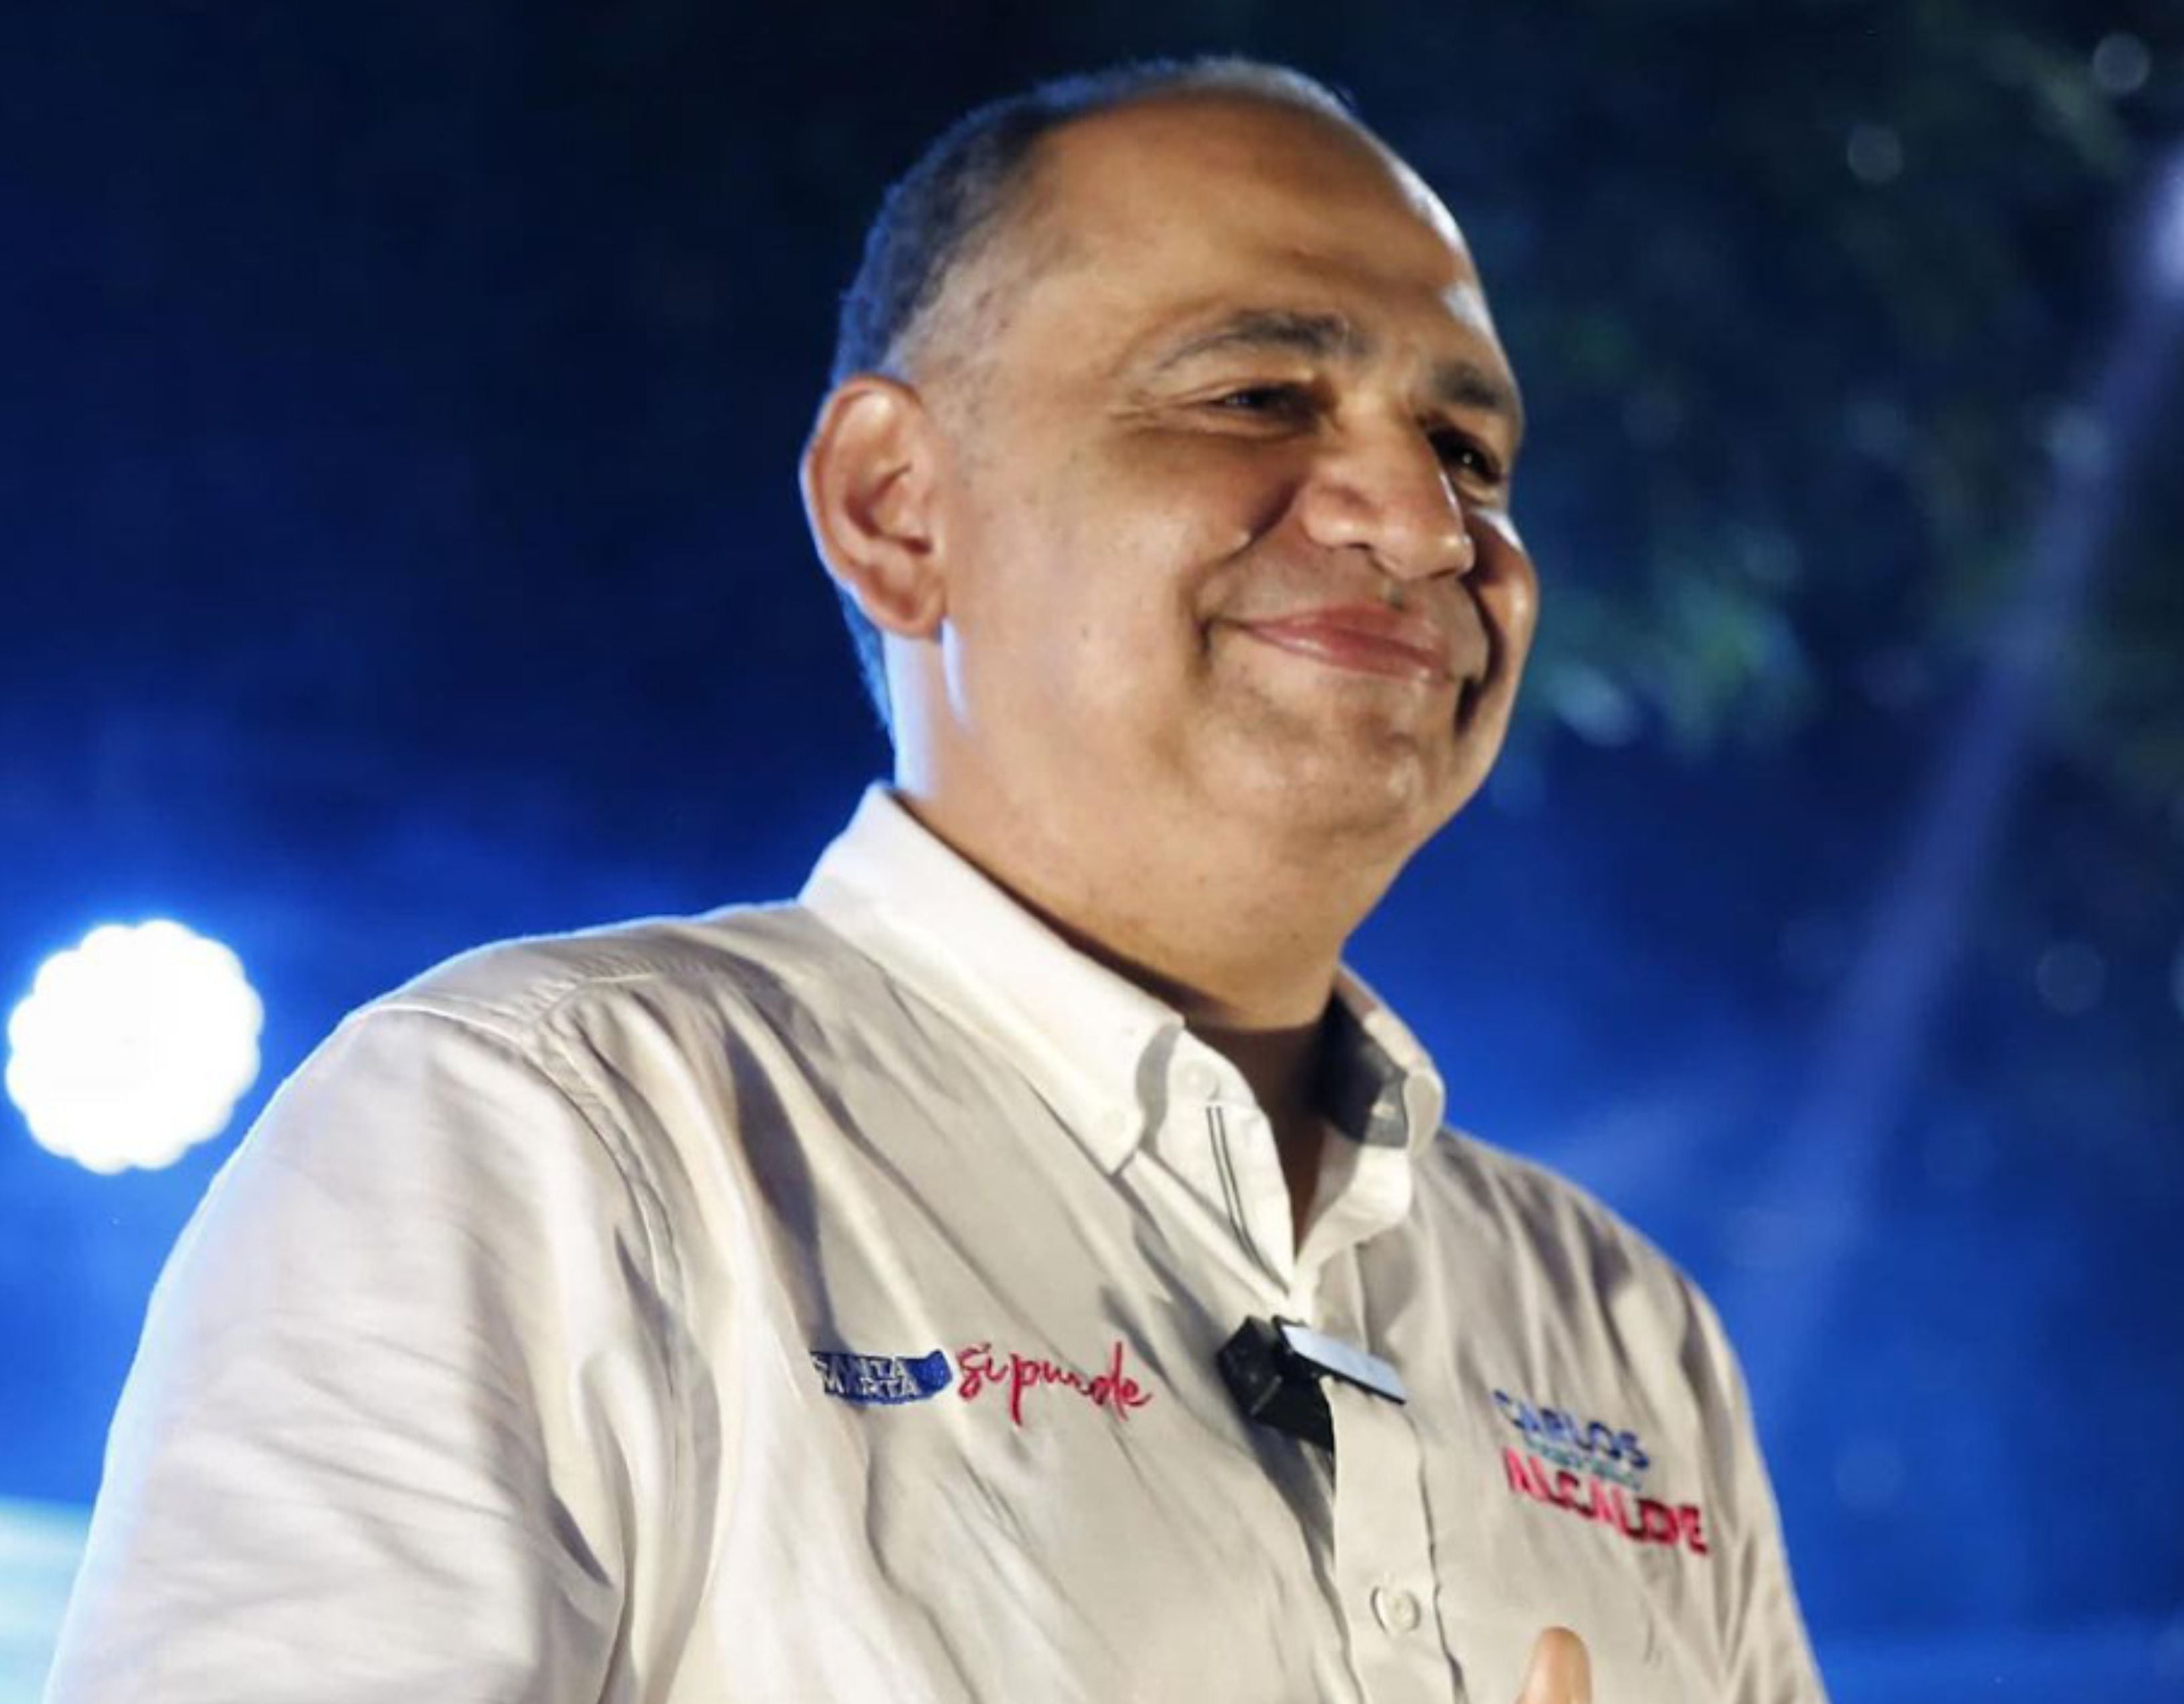 Comisión Escrutadora de Santa Marta deja camino libre a Carlos Pinedo para que sea alcalde